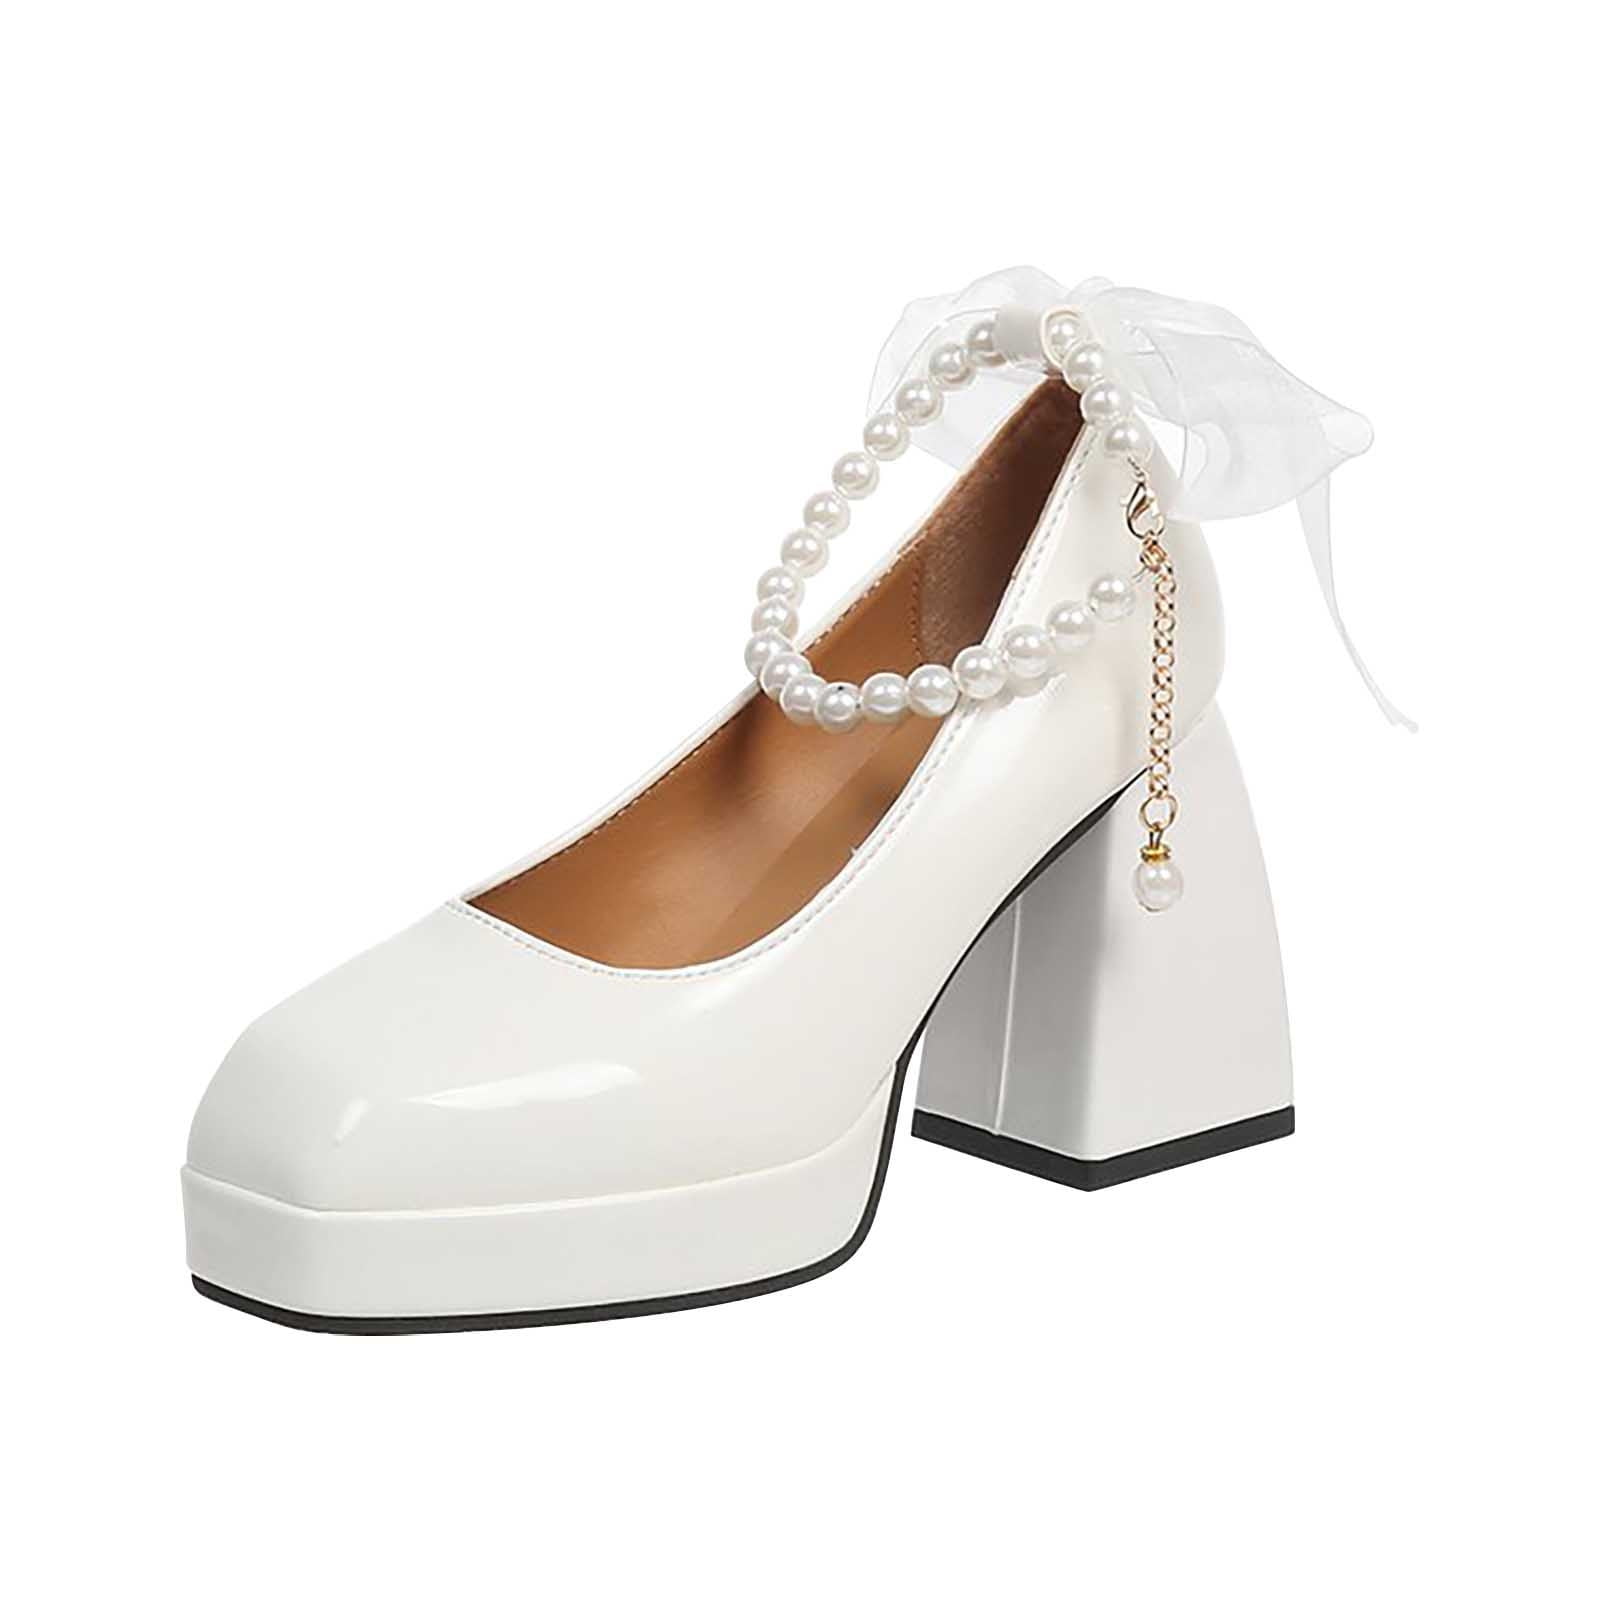 Leather heels Balenciaga White size 6 UK in Leather - 35941532